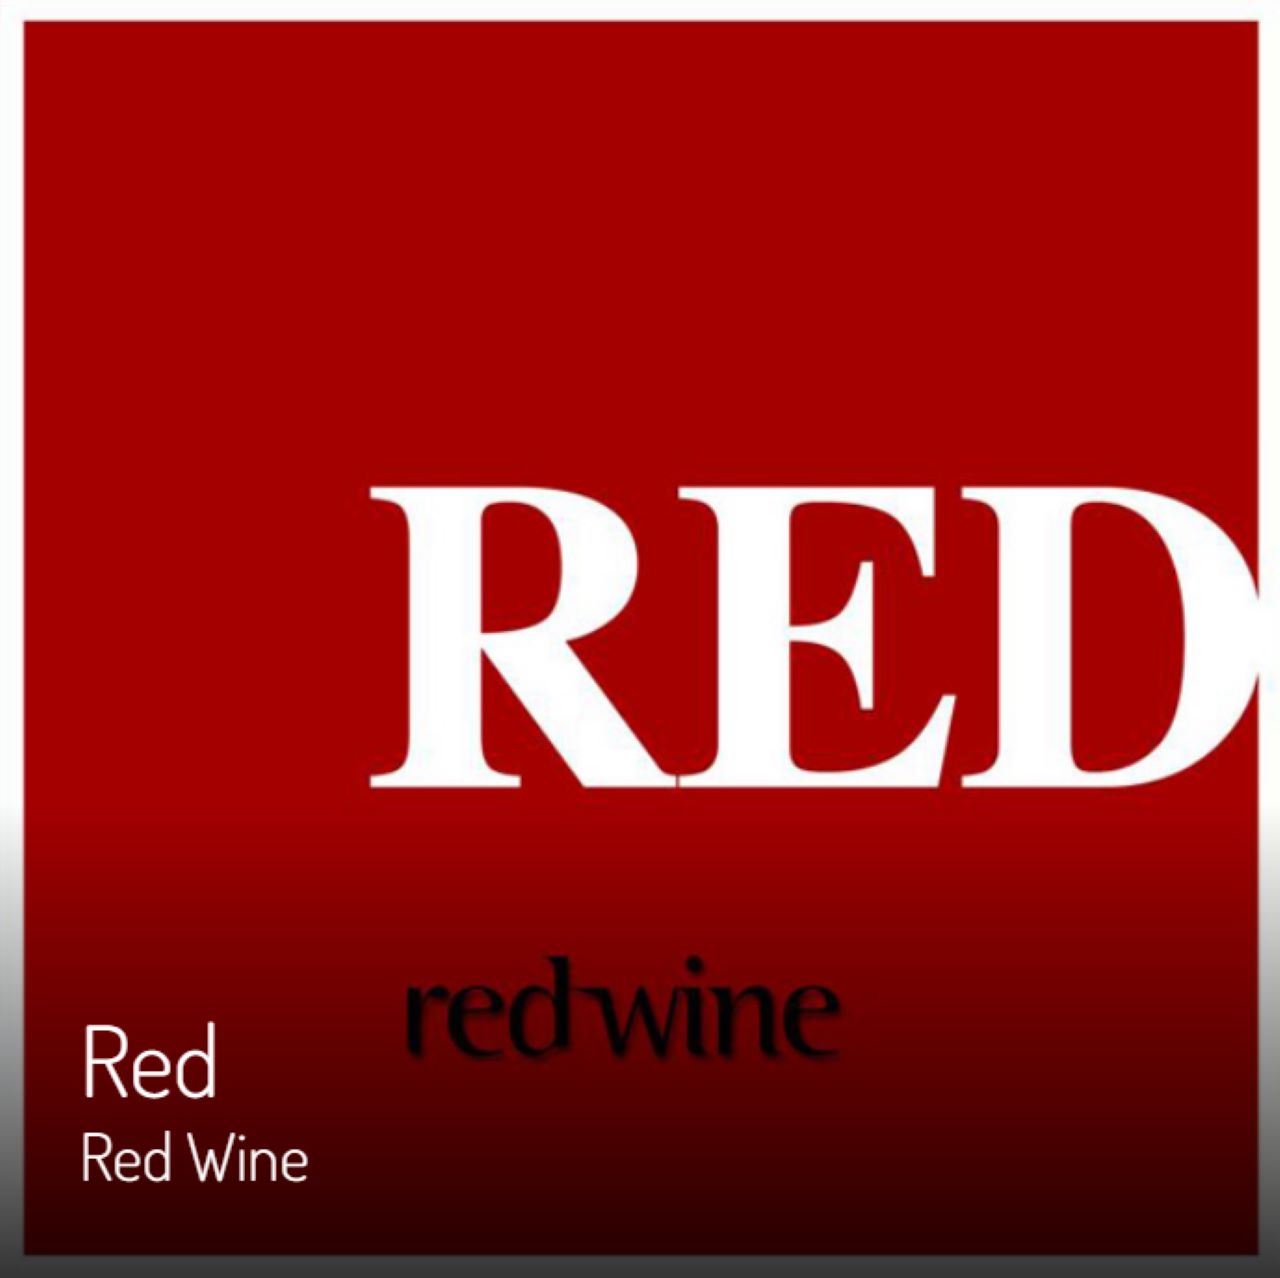 Red Wine - Red cover album